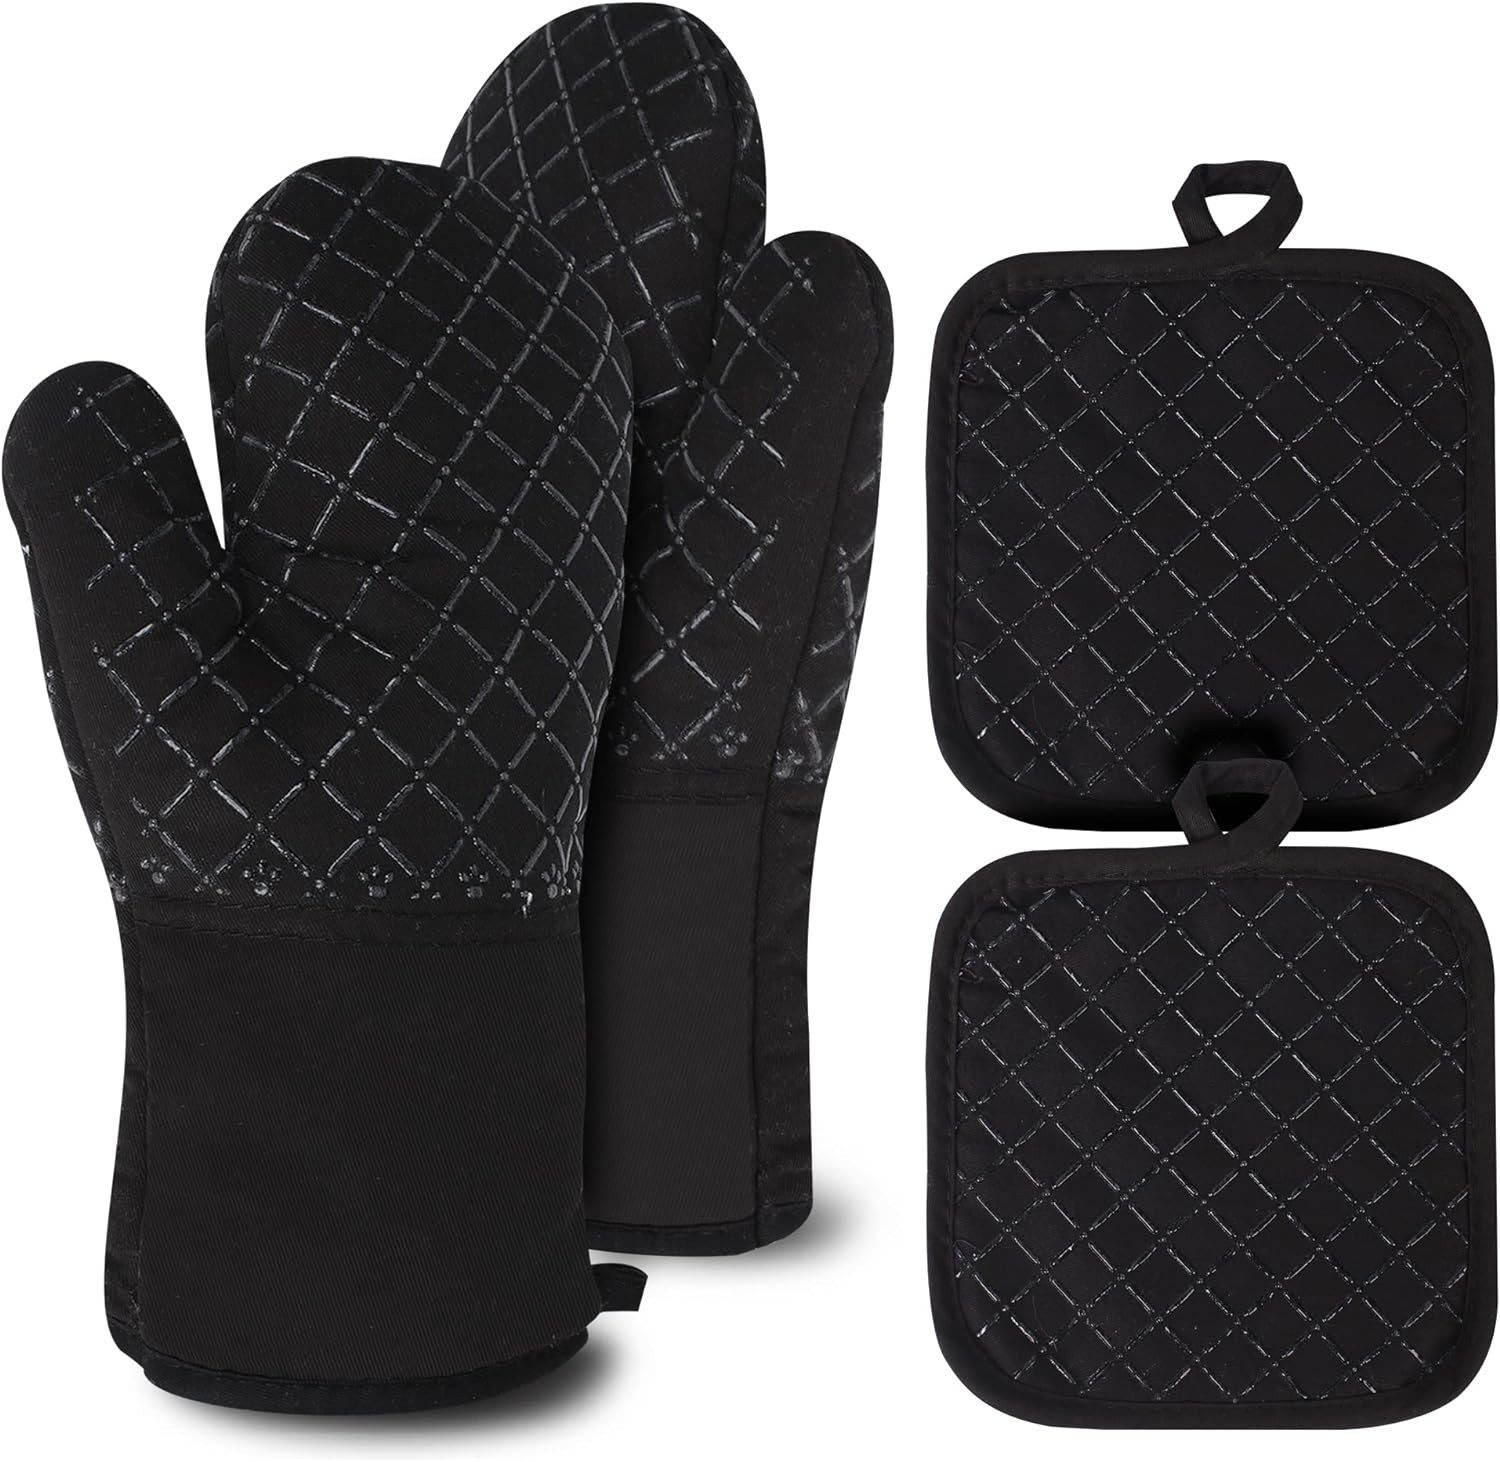 Coonoor Topflappen Topflappen Handschuh, Ofenhandschuhe Hitzebestaendig, rutschfeste Topfhandschuhe 4er-Set, Hochtemperaturbeständigkeit 300°